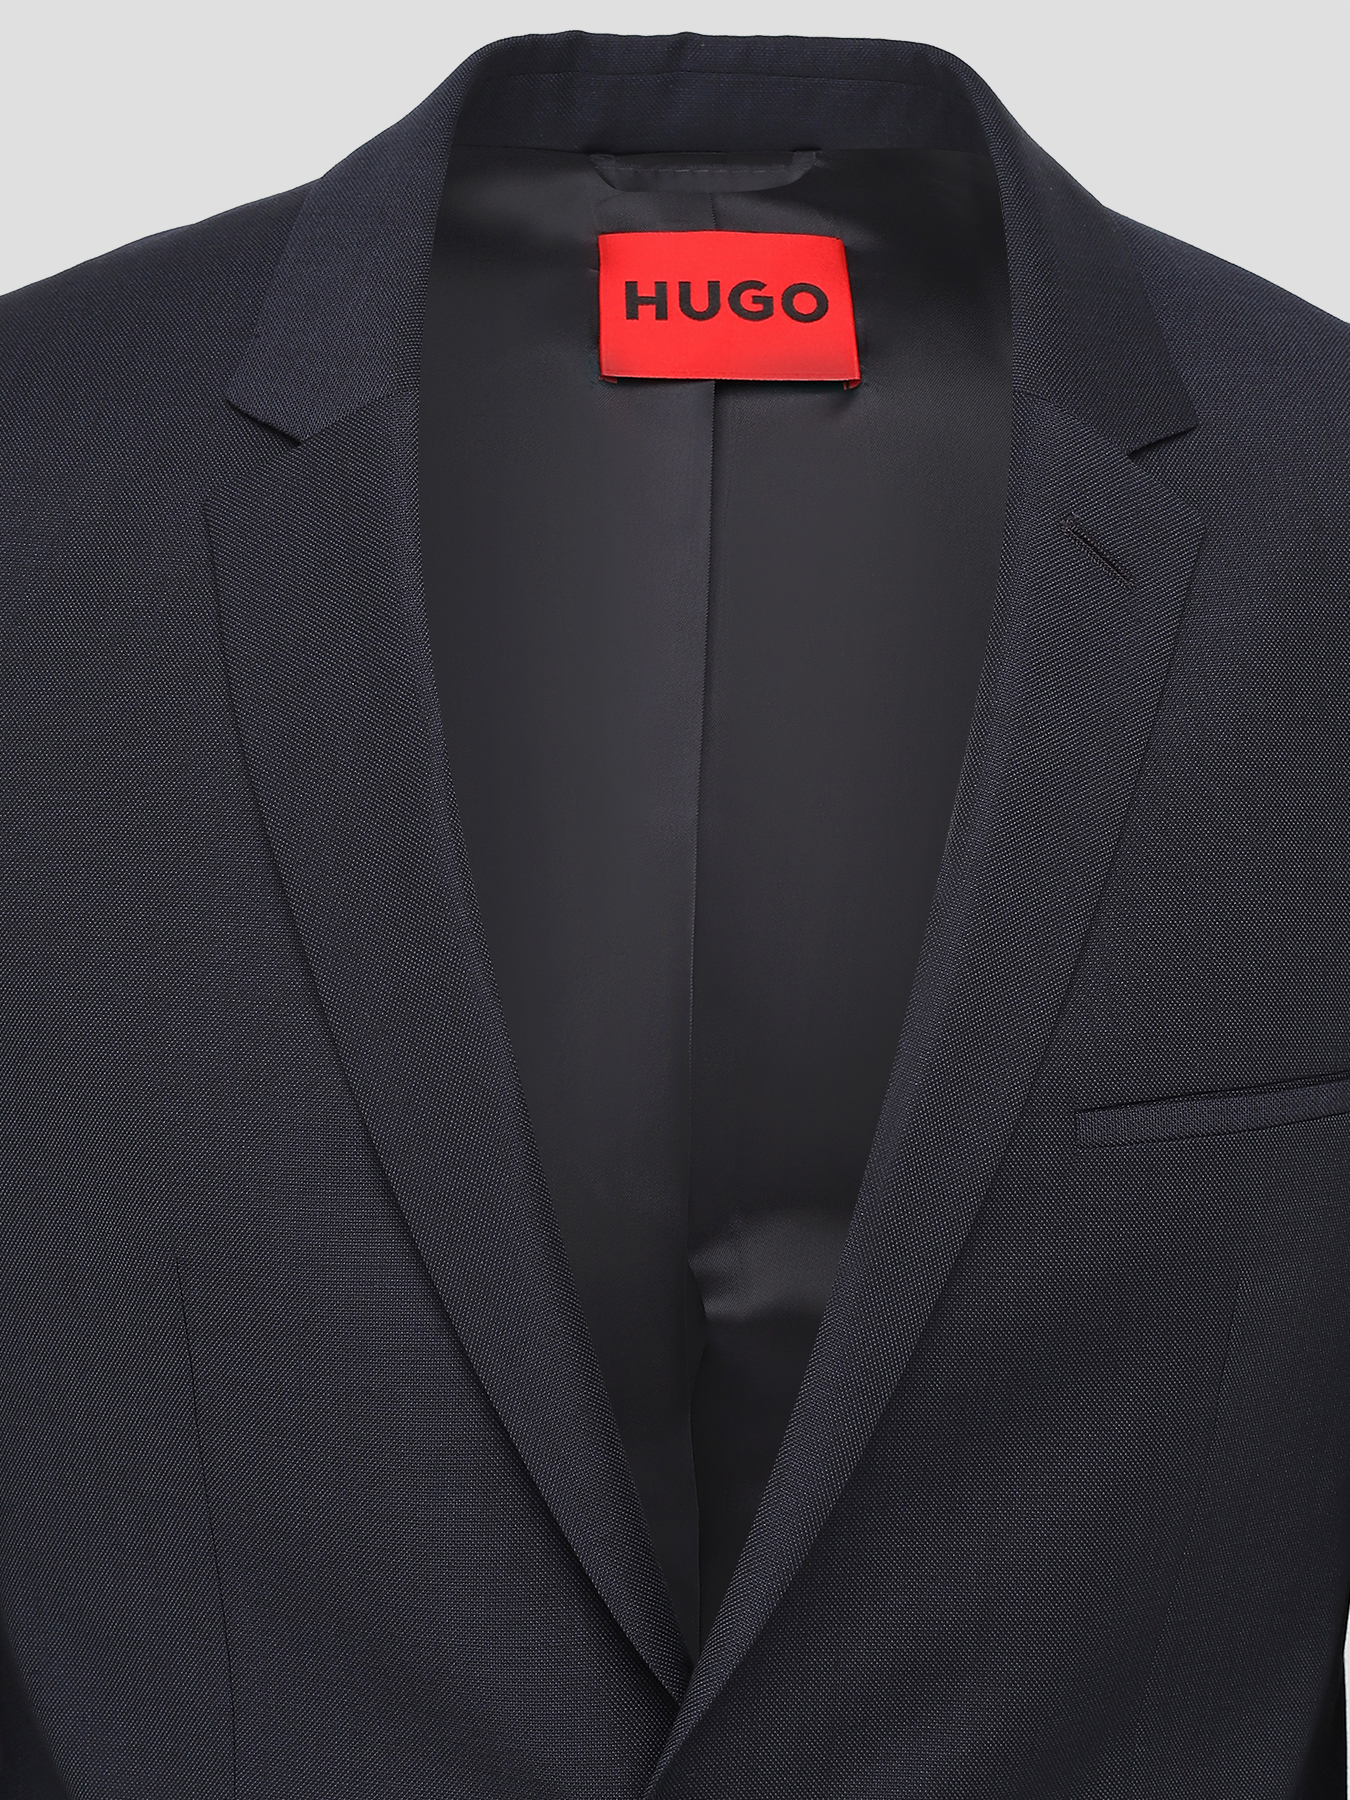 Классический костюм Arti HUGO 424683-028, цвет темно-синий, размер 54 - фото 7